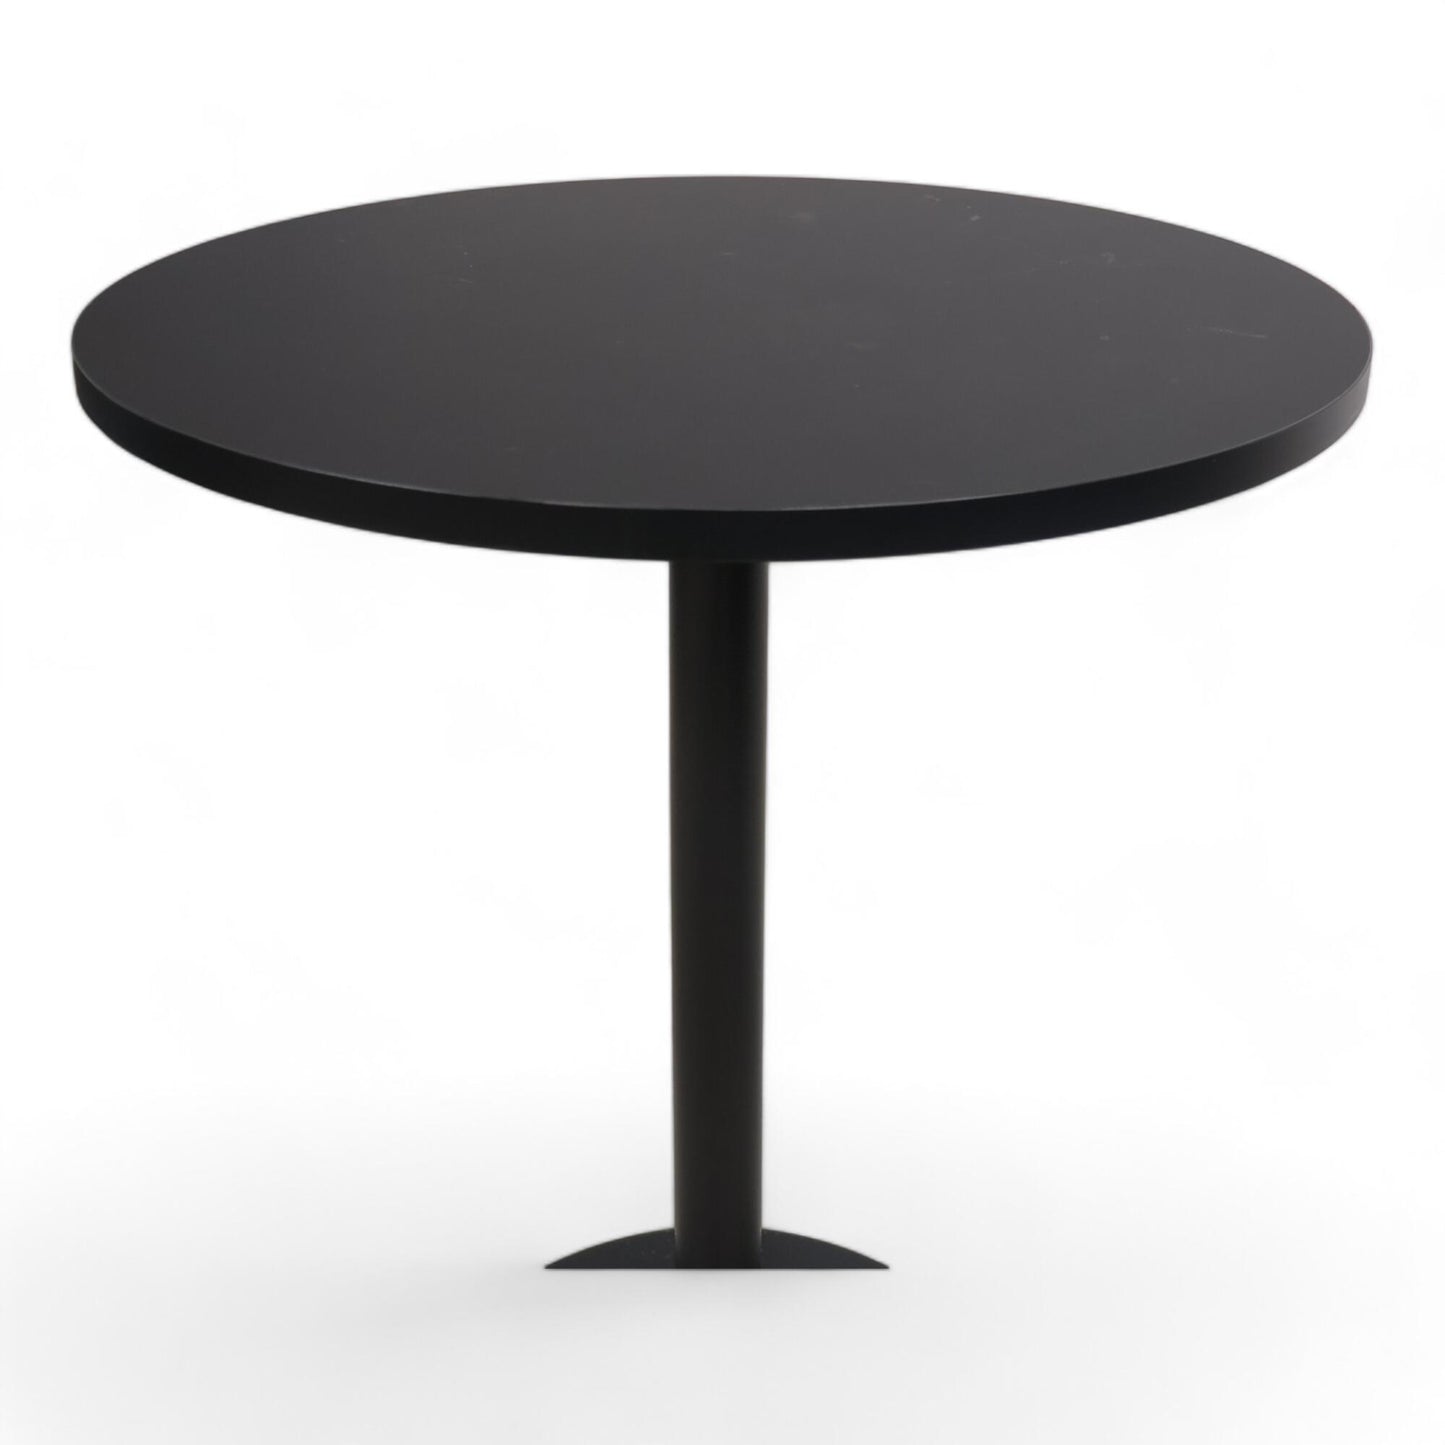 Nyrenset | Pedrali Inox style høyt rundt loungebord i sort